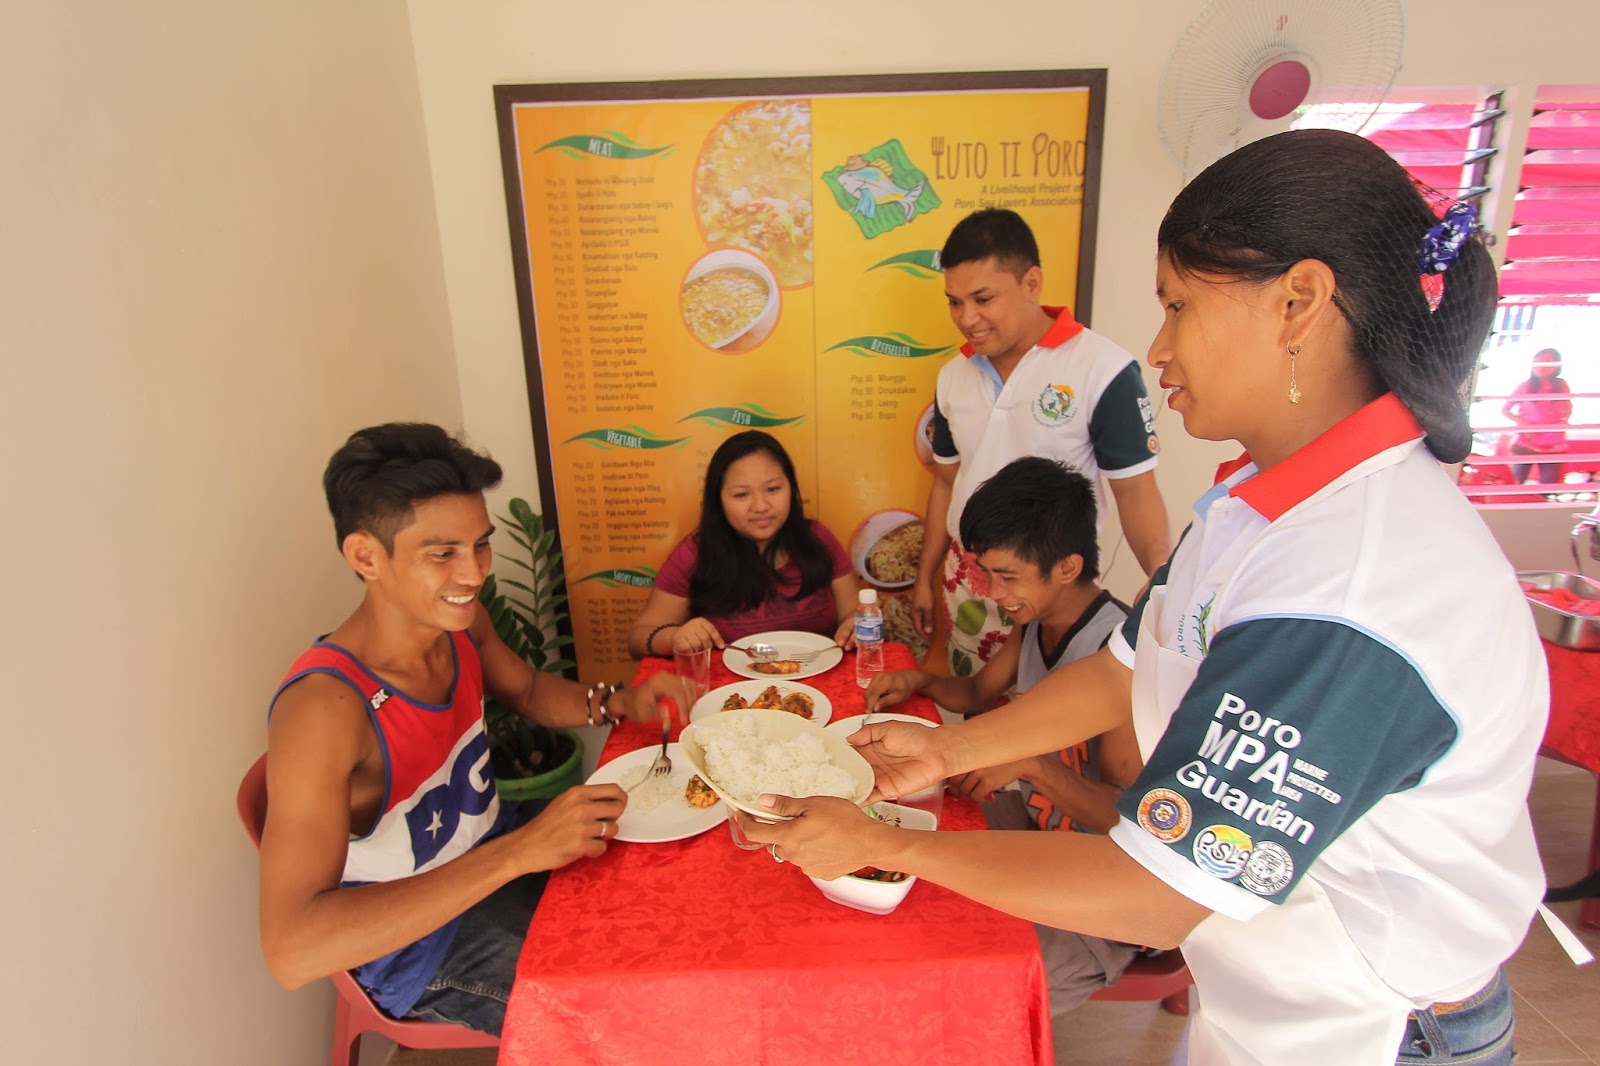 Food service livelihood program for Poro fishers